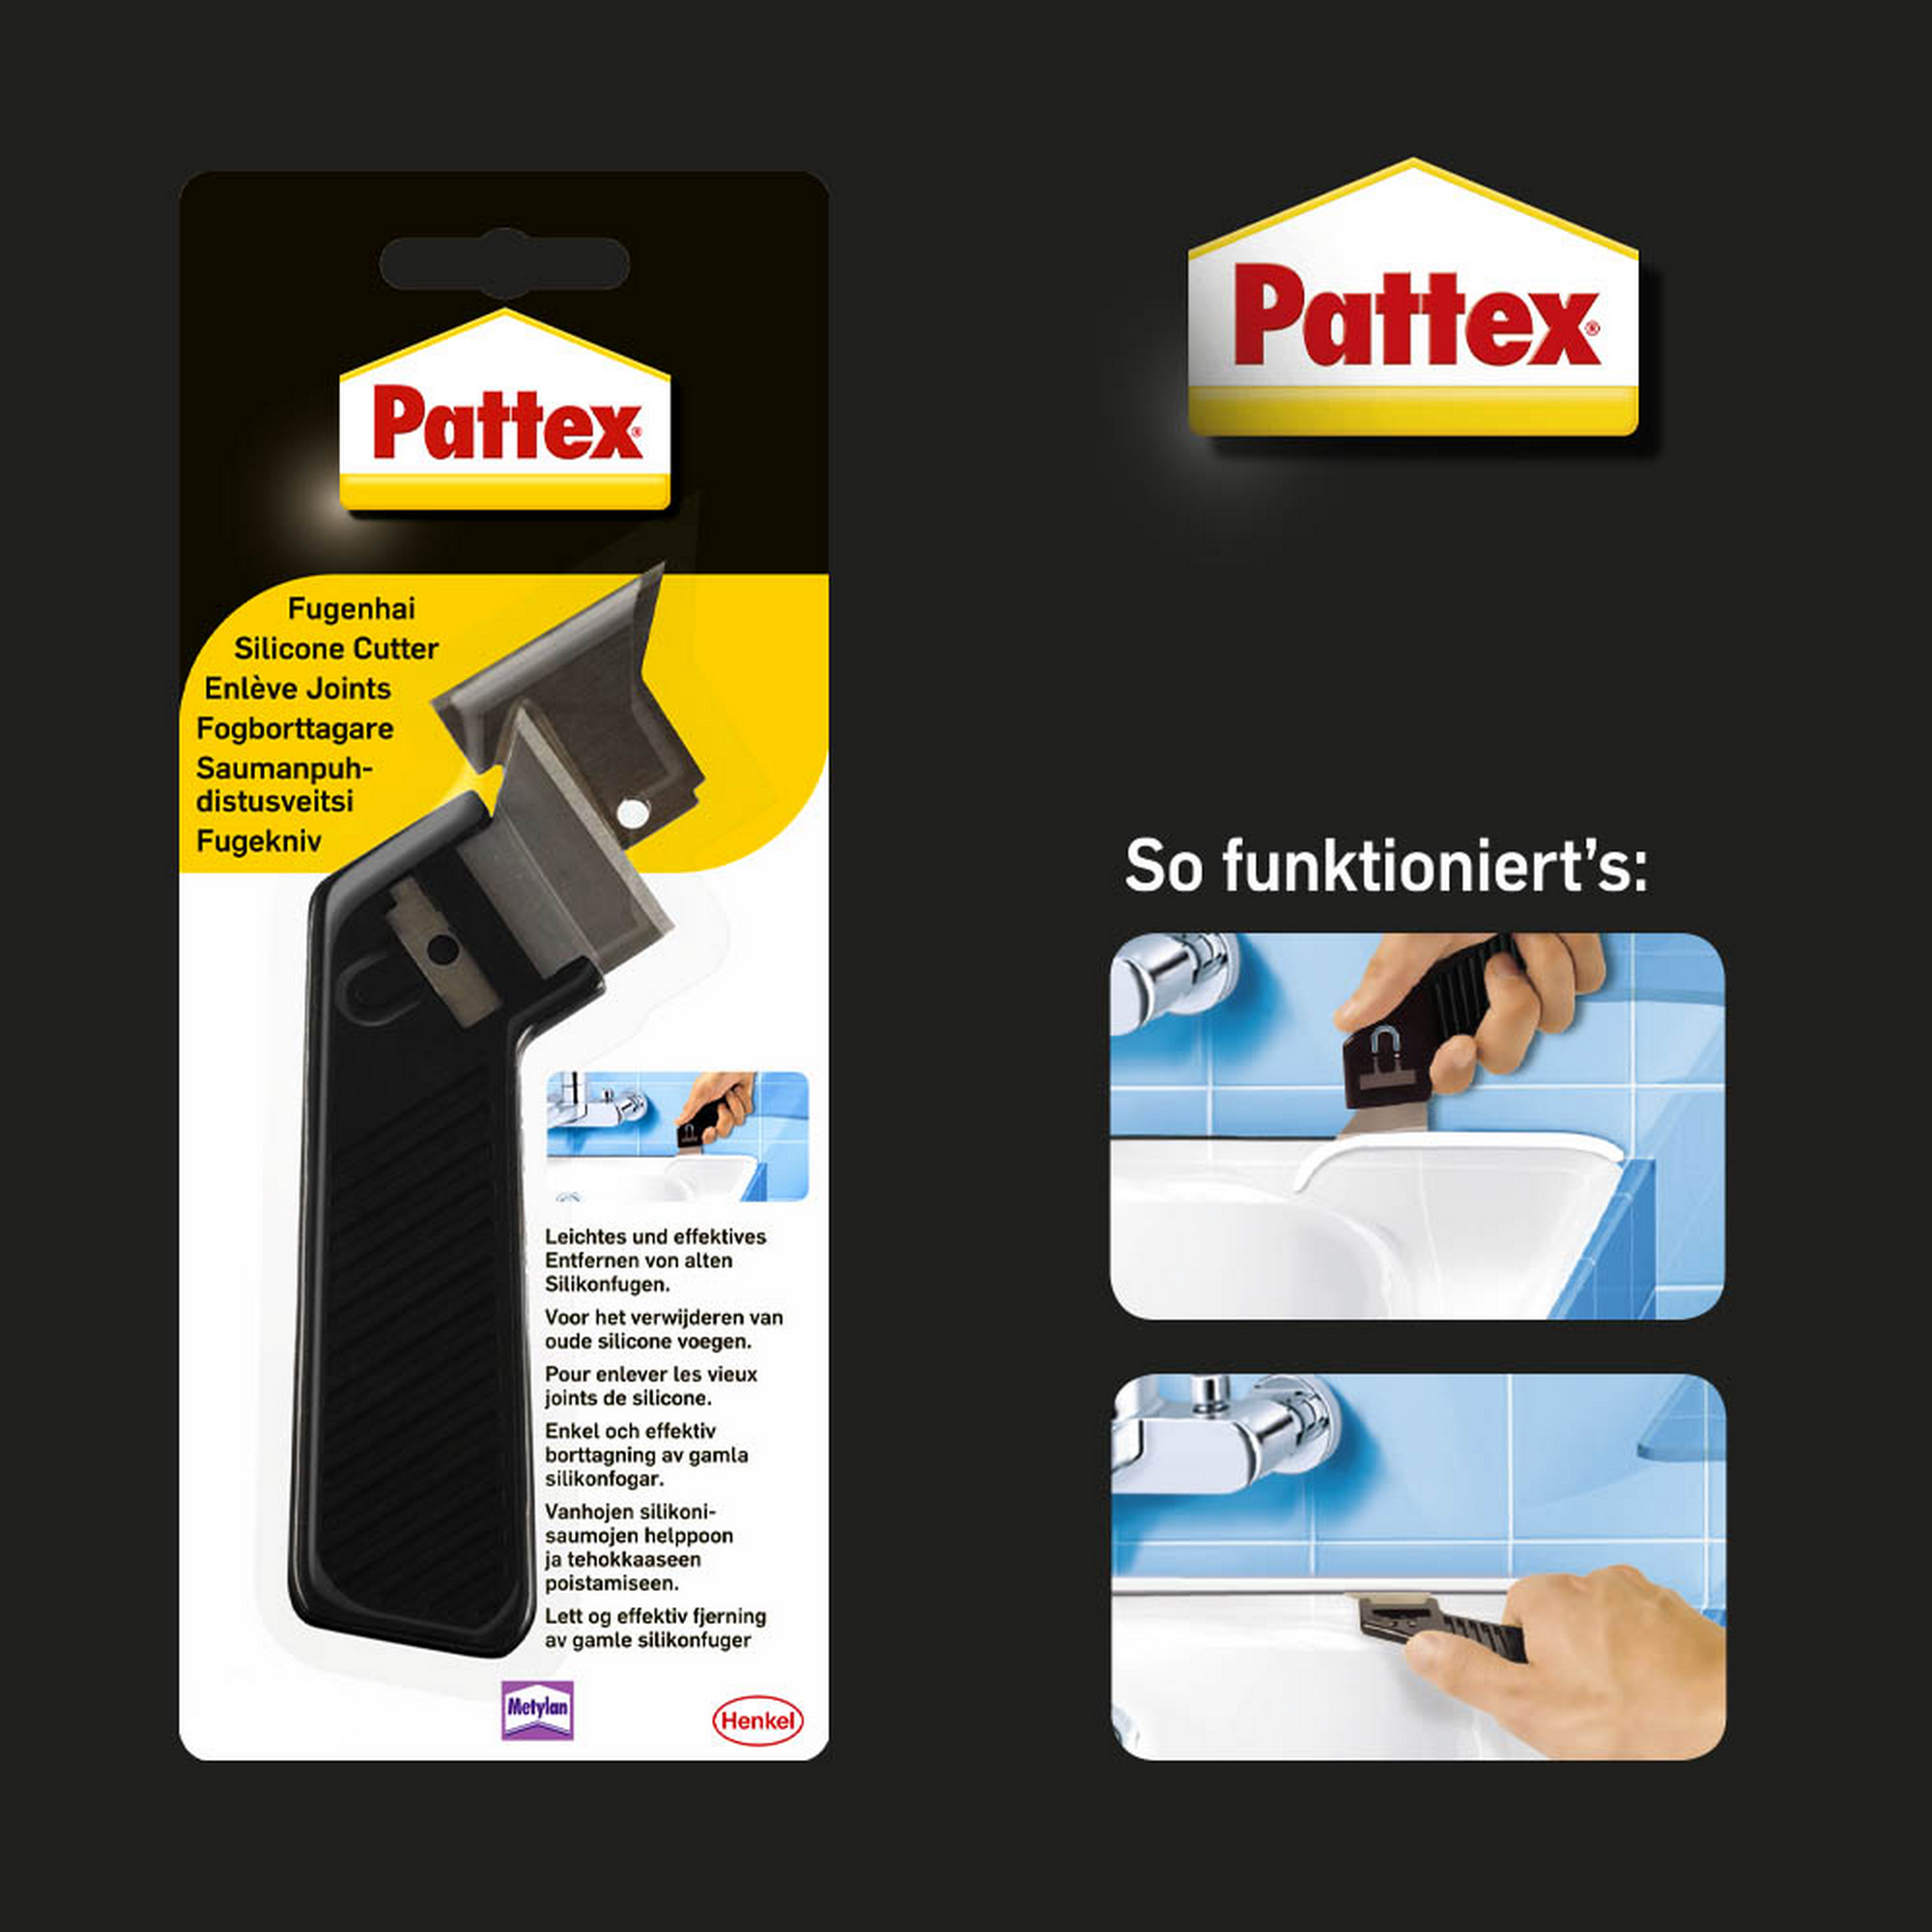 Pattex Fugenhai + product picture